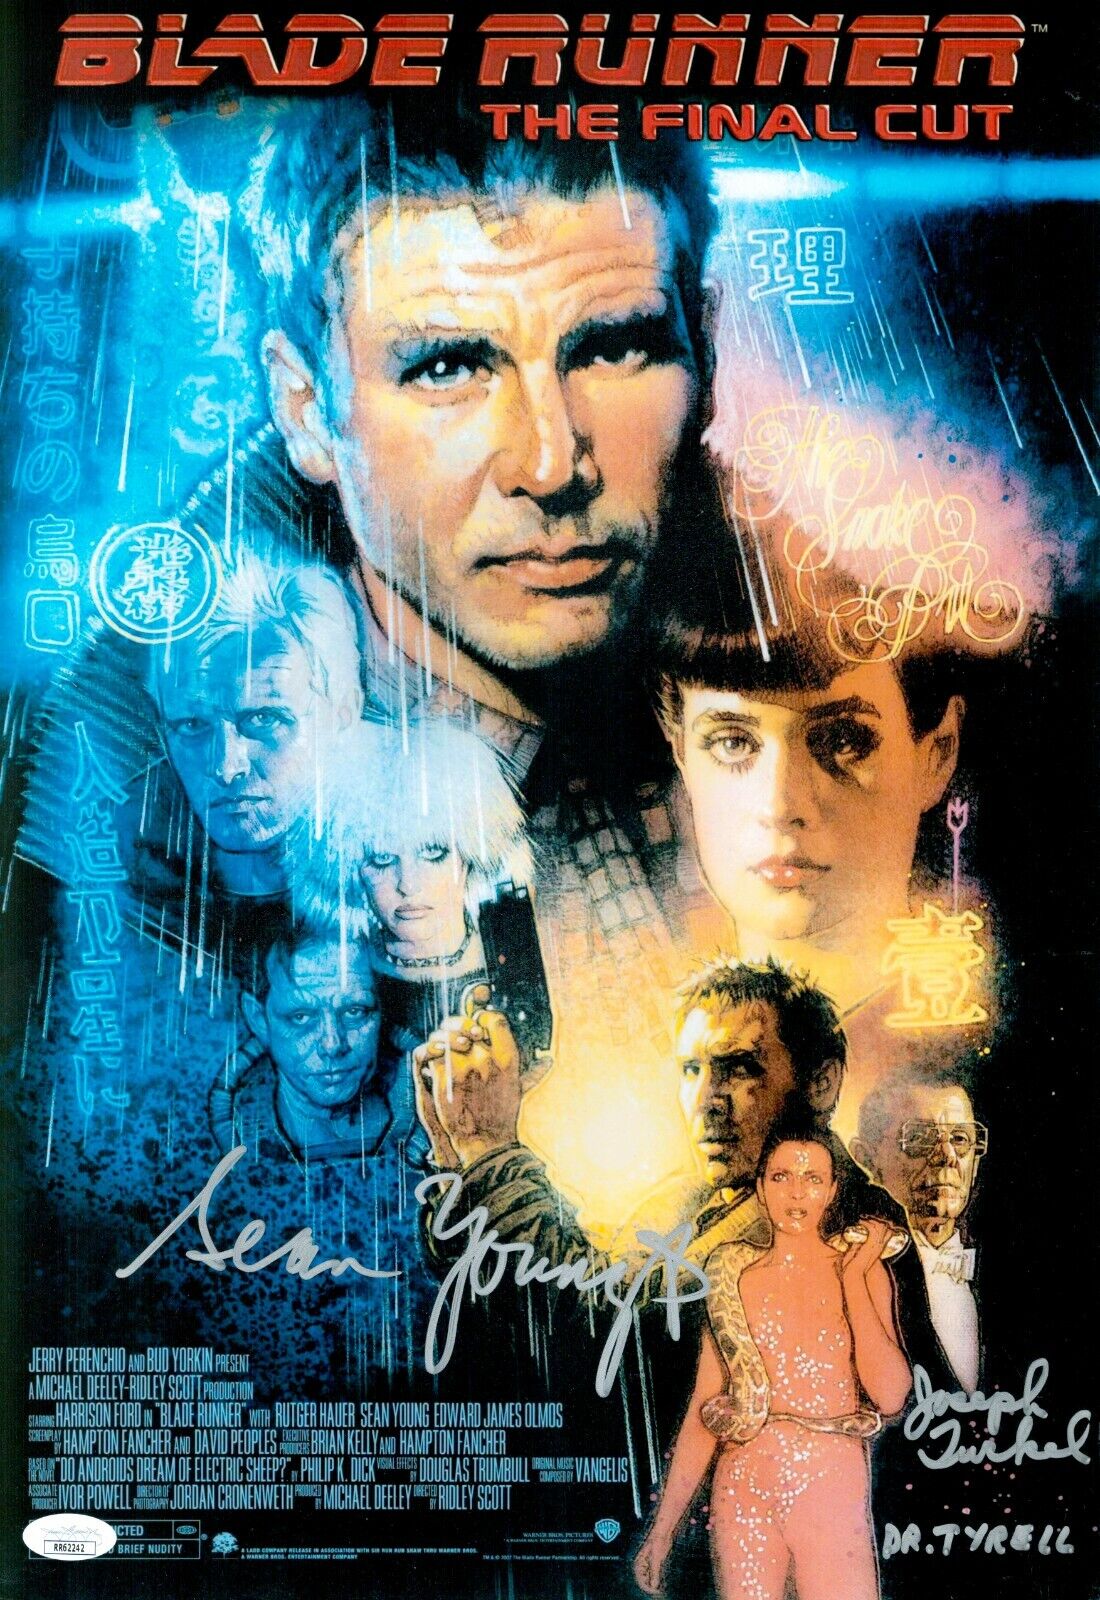 Sean Young Joseph Turkel Signed 12x18 Blade Runner Authentic Autograph JSA COA